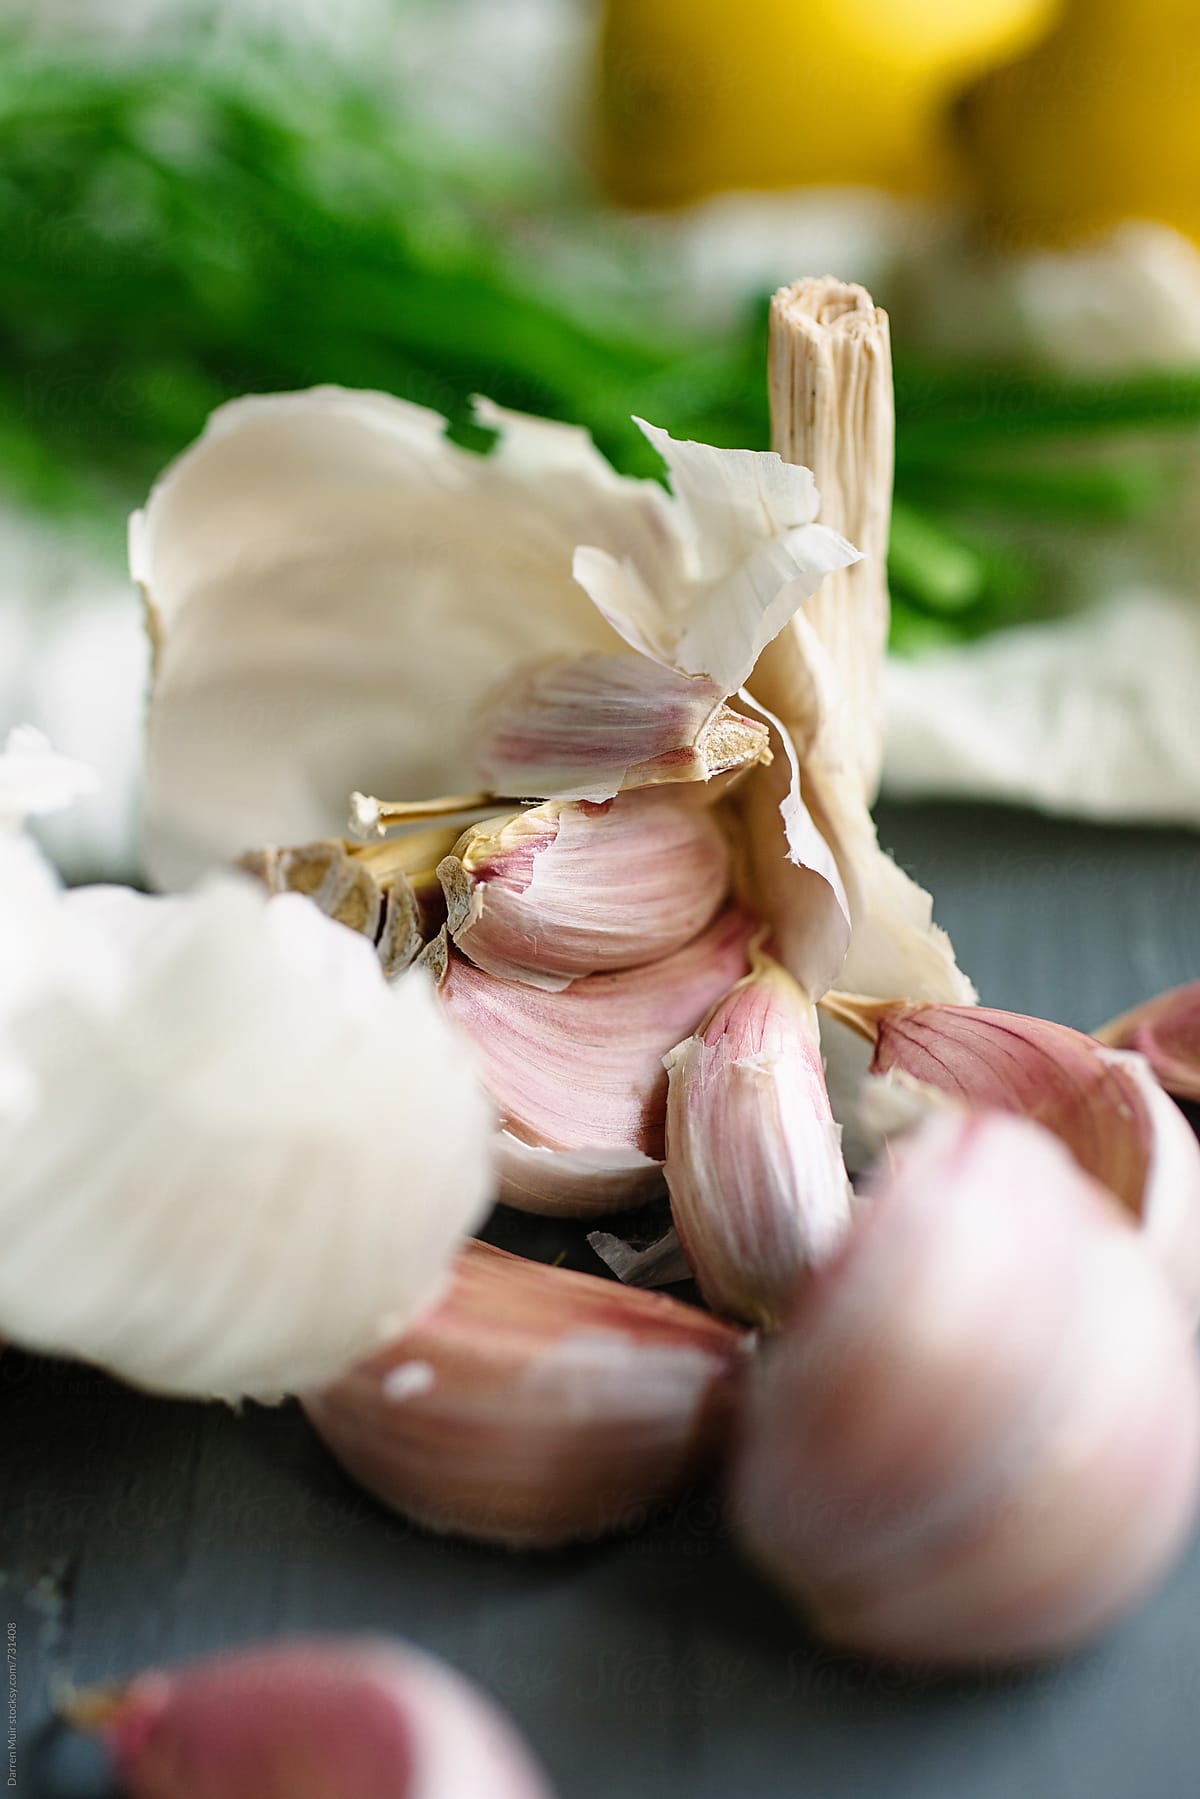 Closeup of bulbs of garlic.